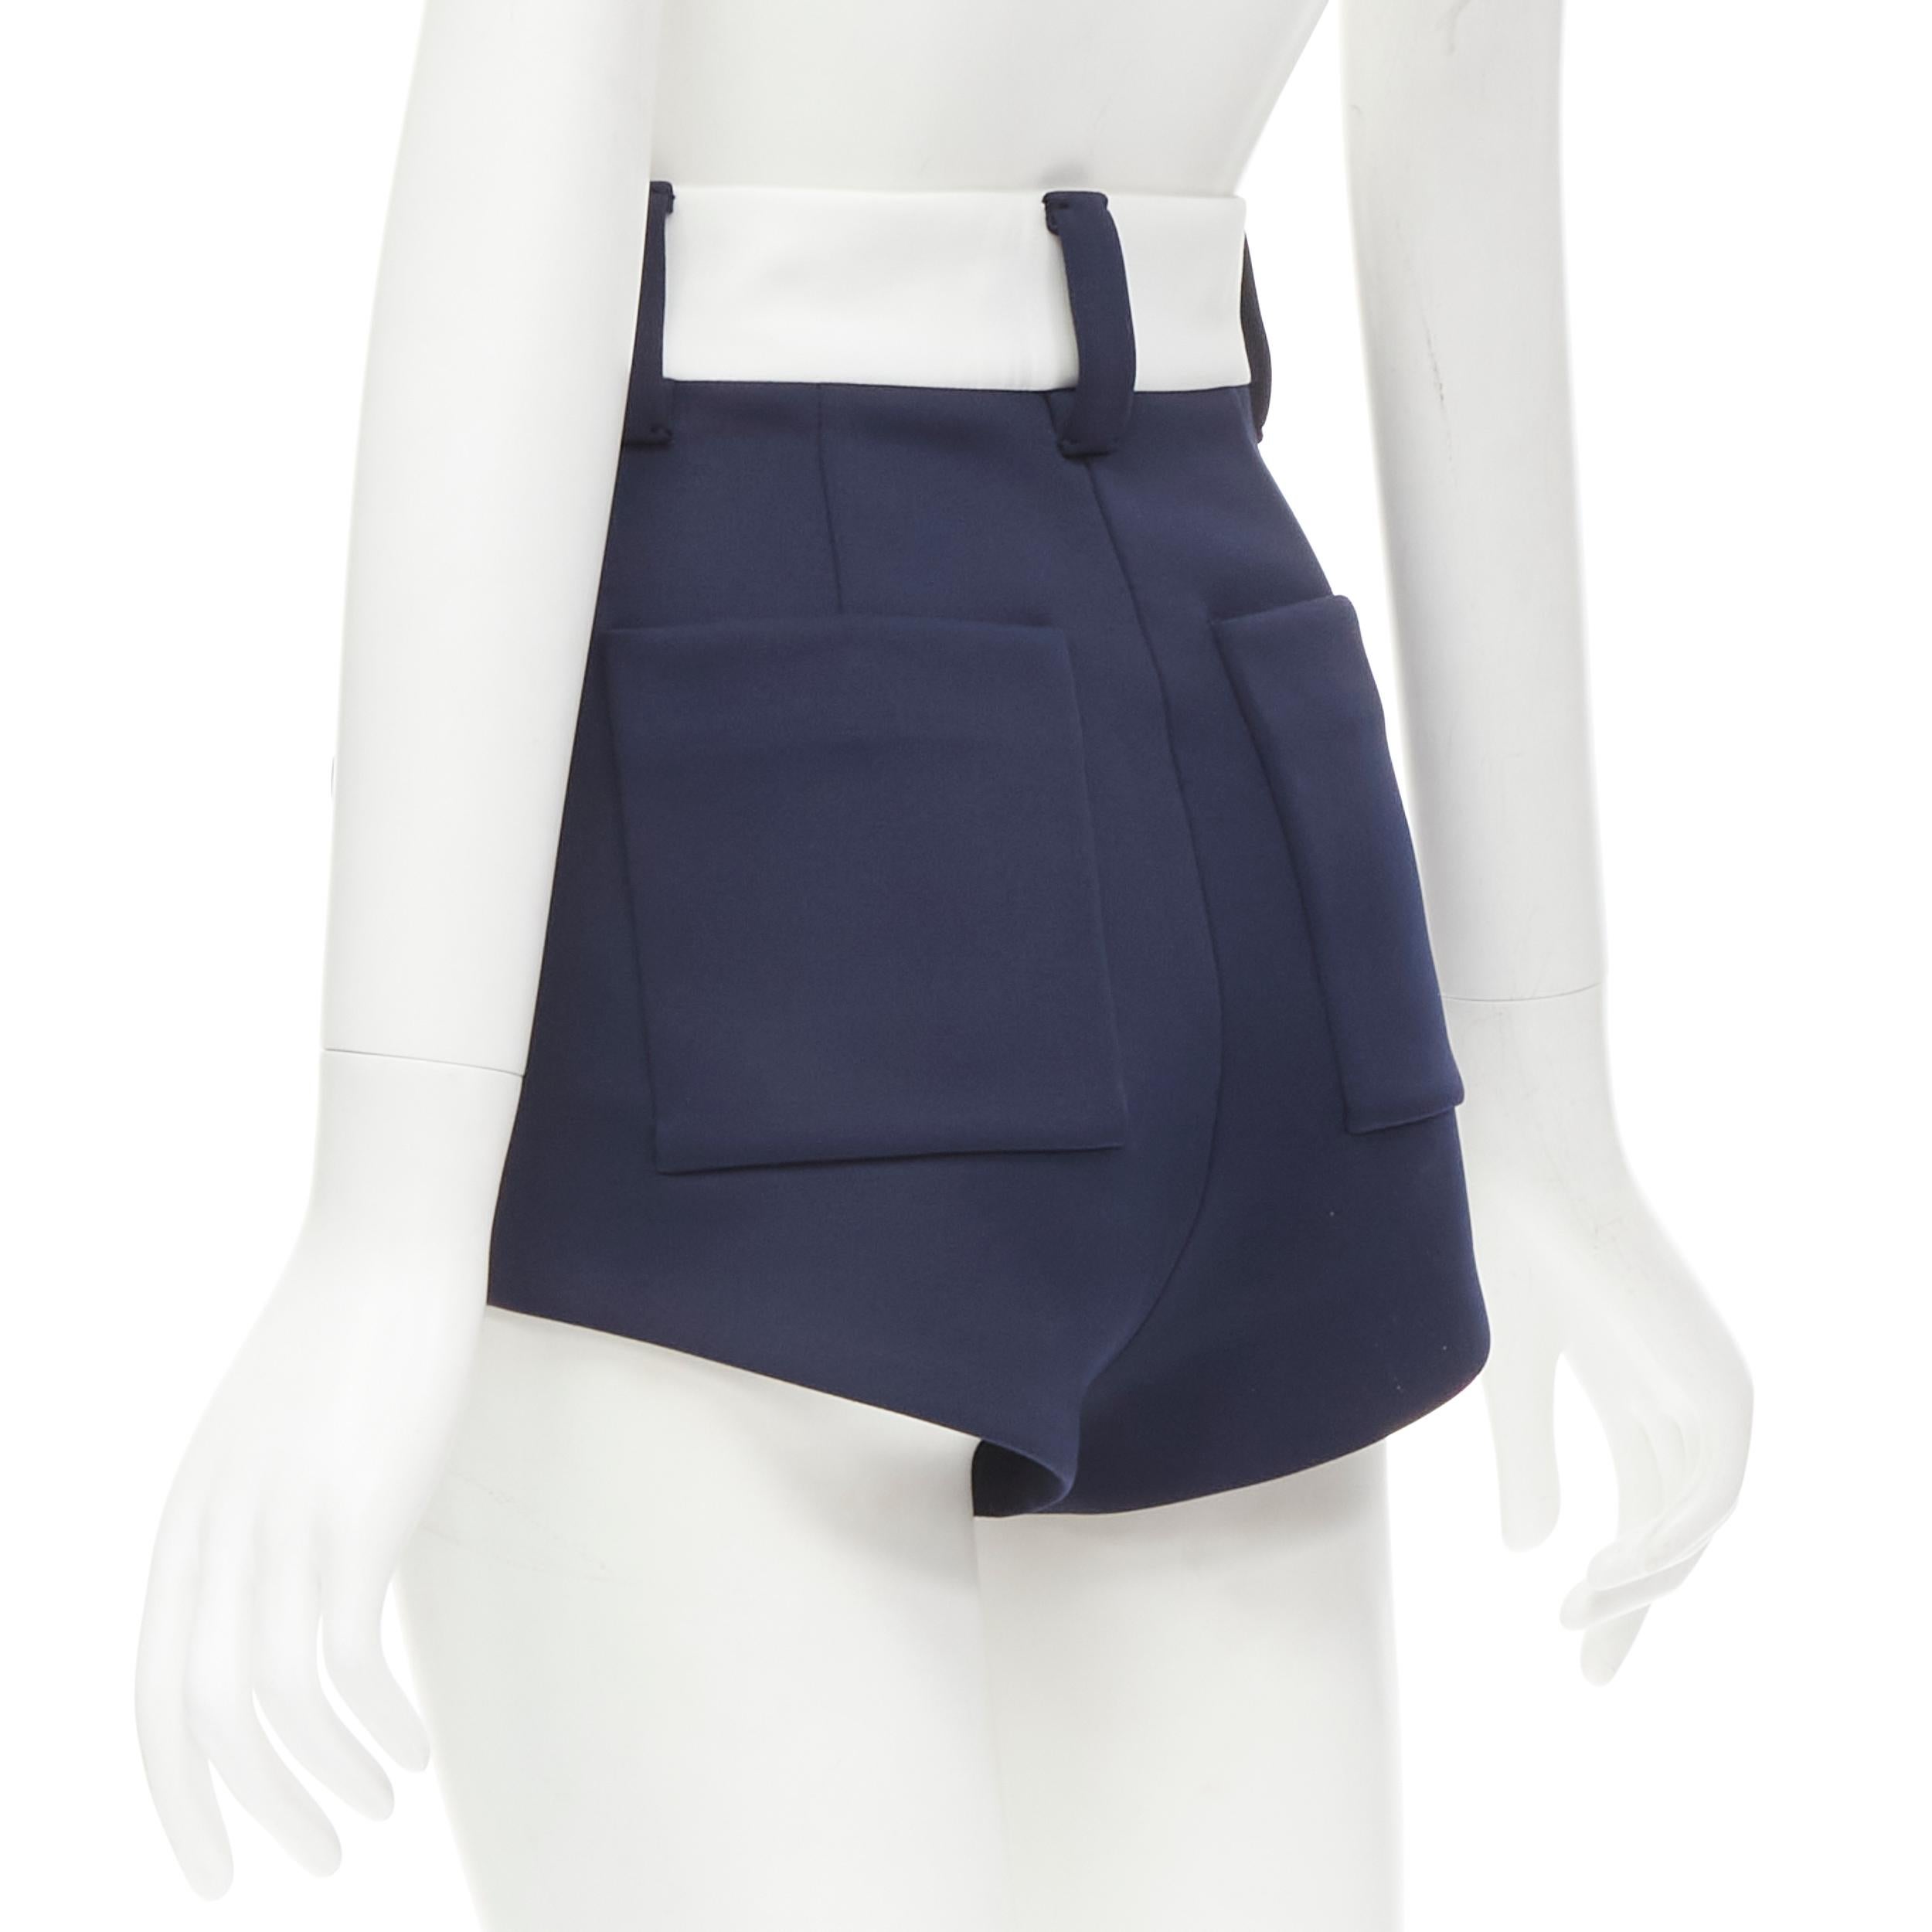 Women's MIU MIU navy sky blue white zip front high waisted thick cotton shorts IT36 XS